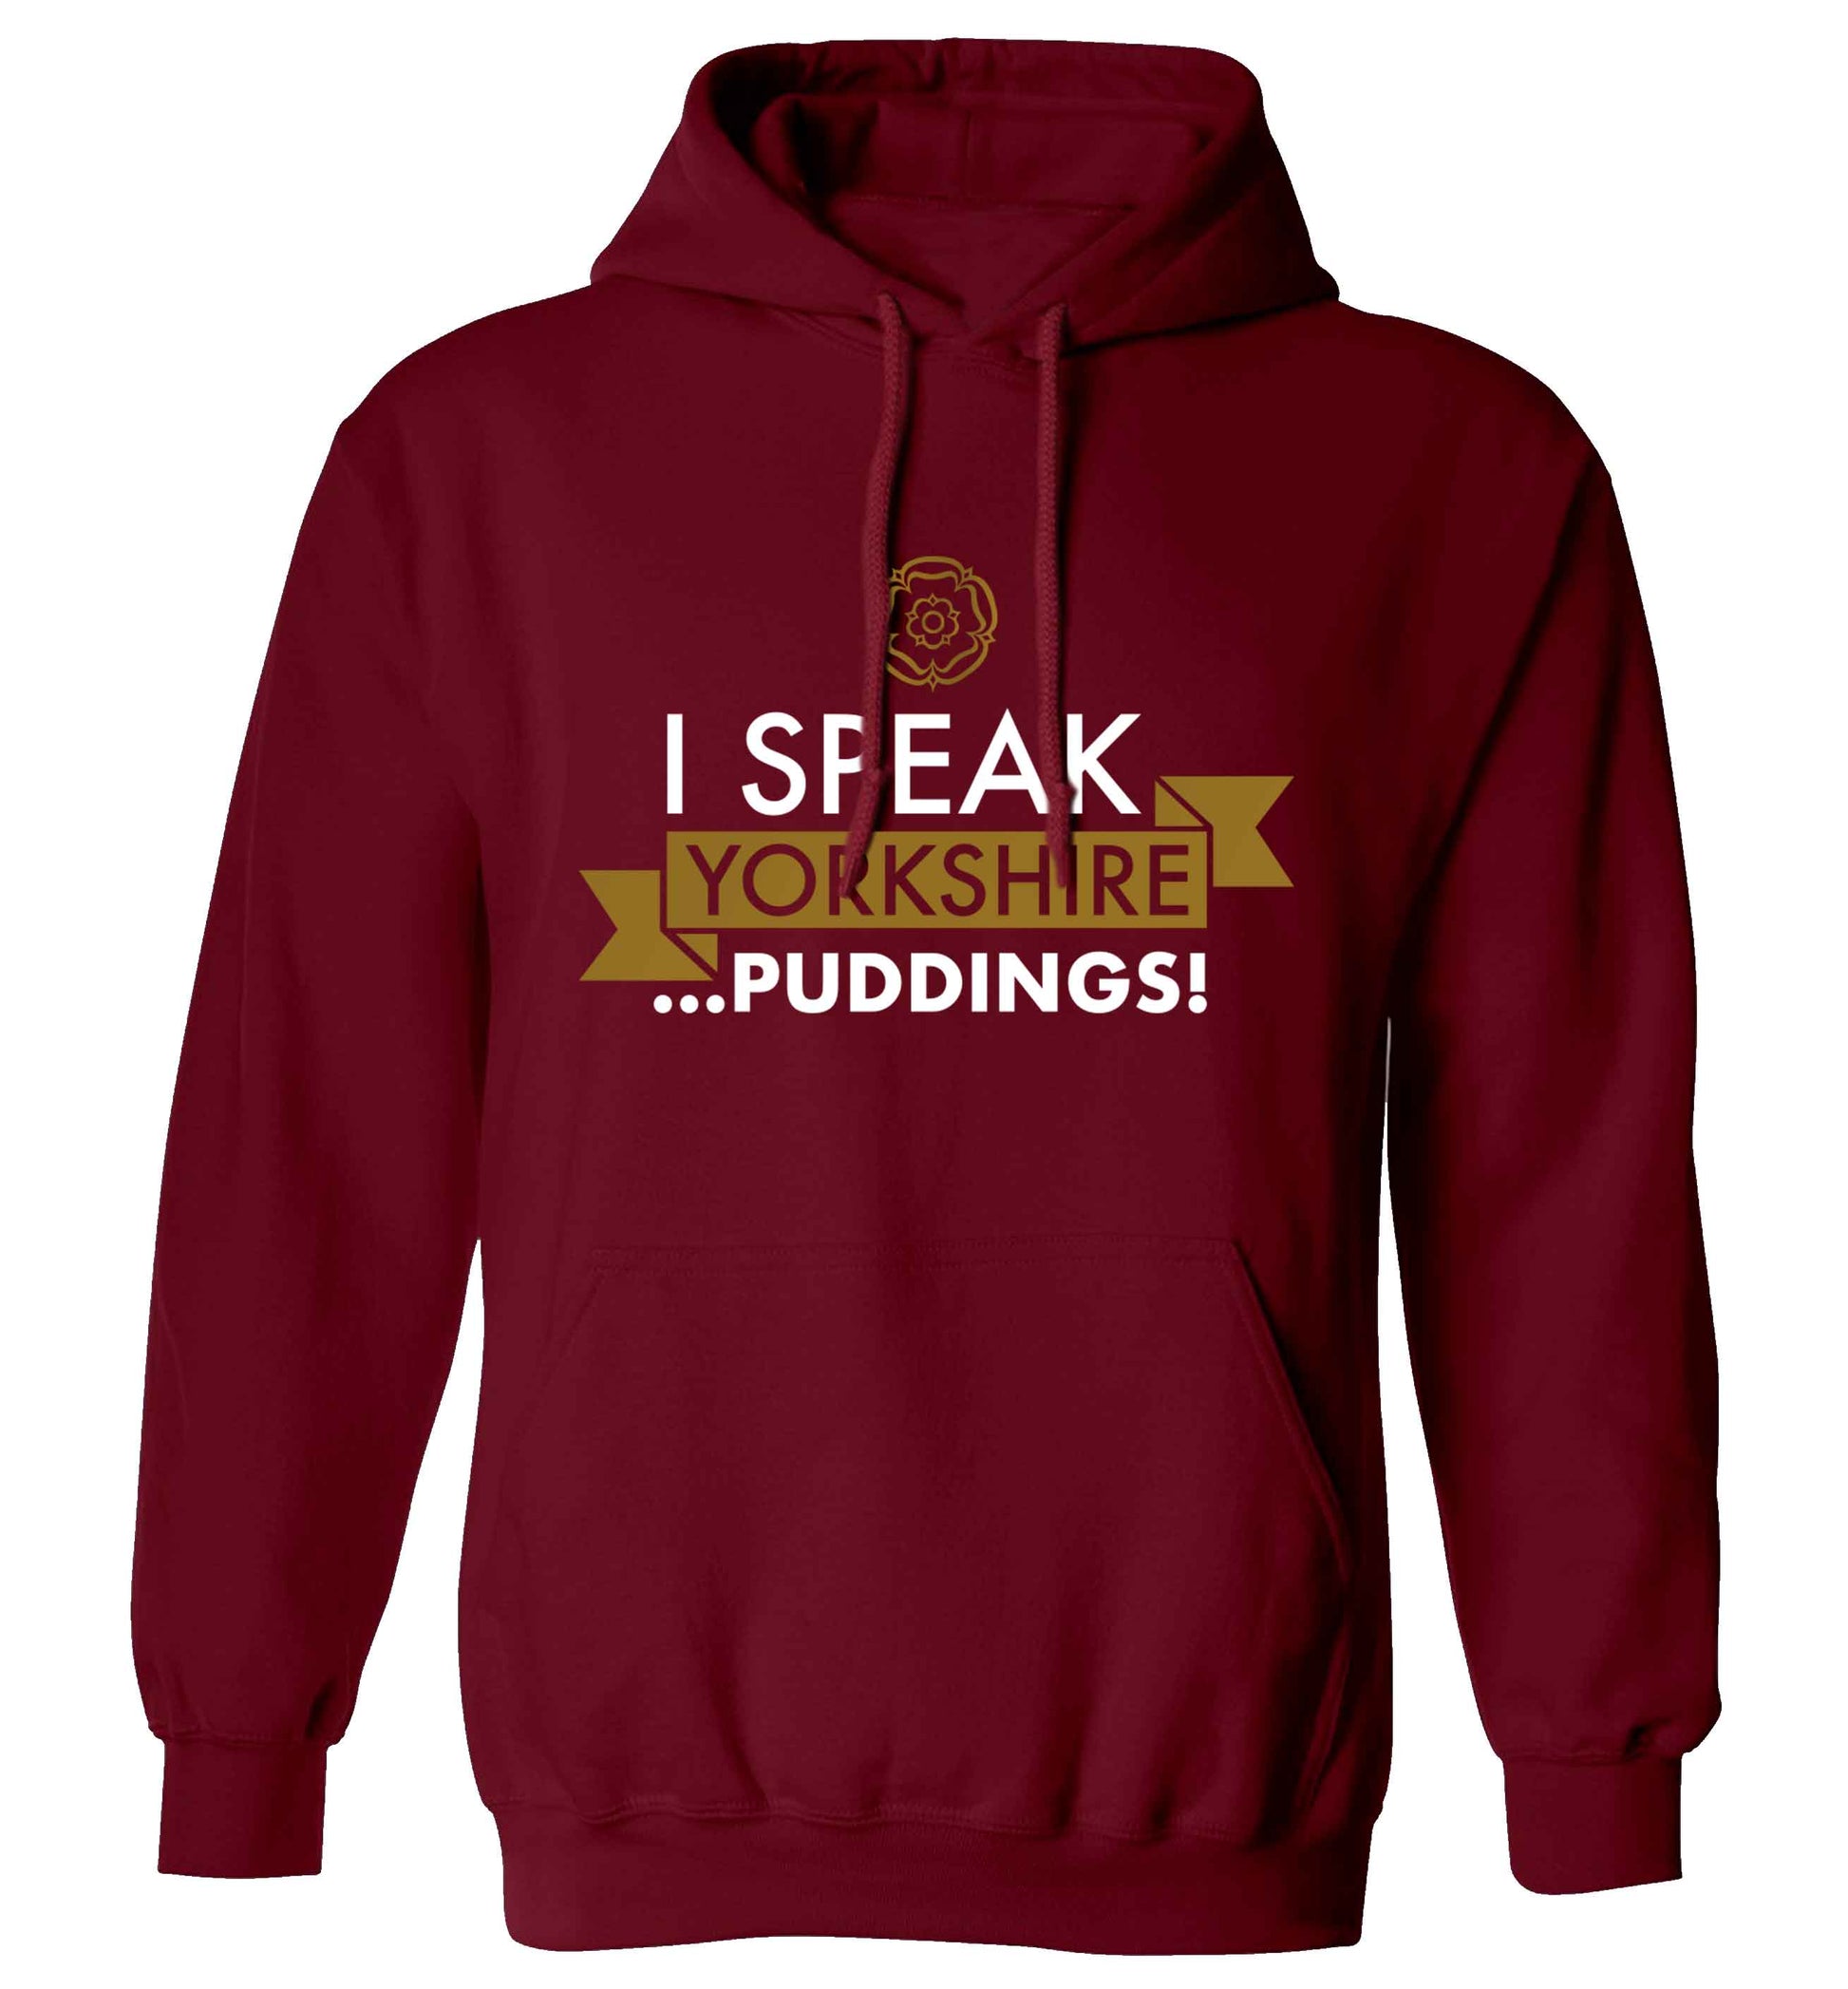 I speak Yorkshire...puddings adults unisex maroon hoodie 2XL